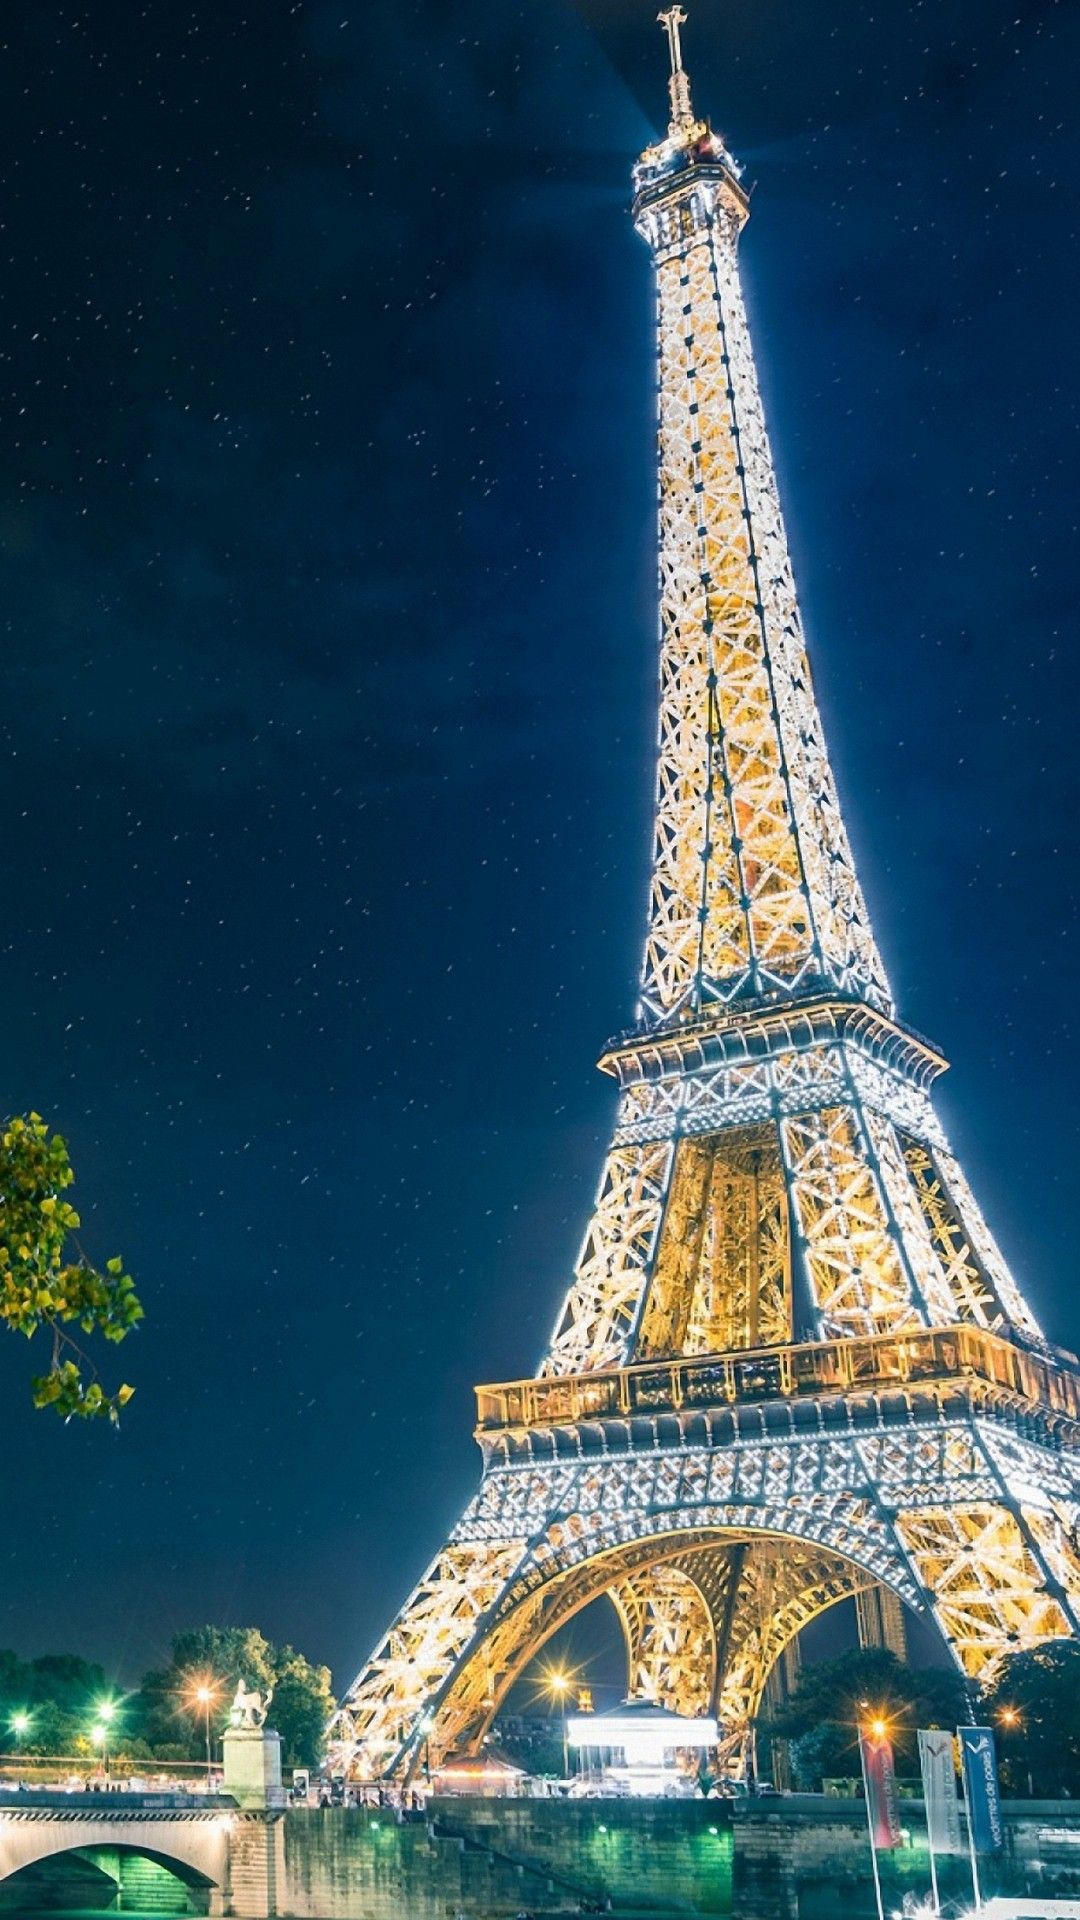 Eiffel Tower Wallpaper